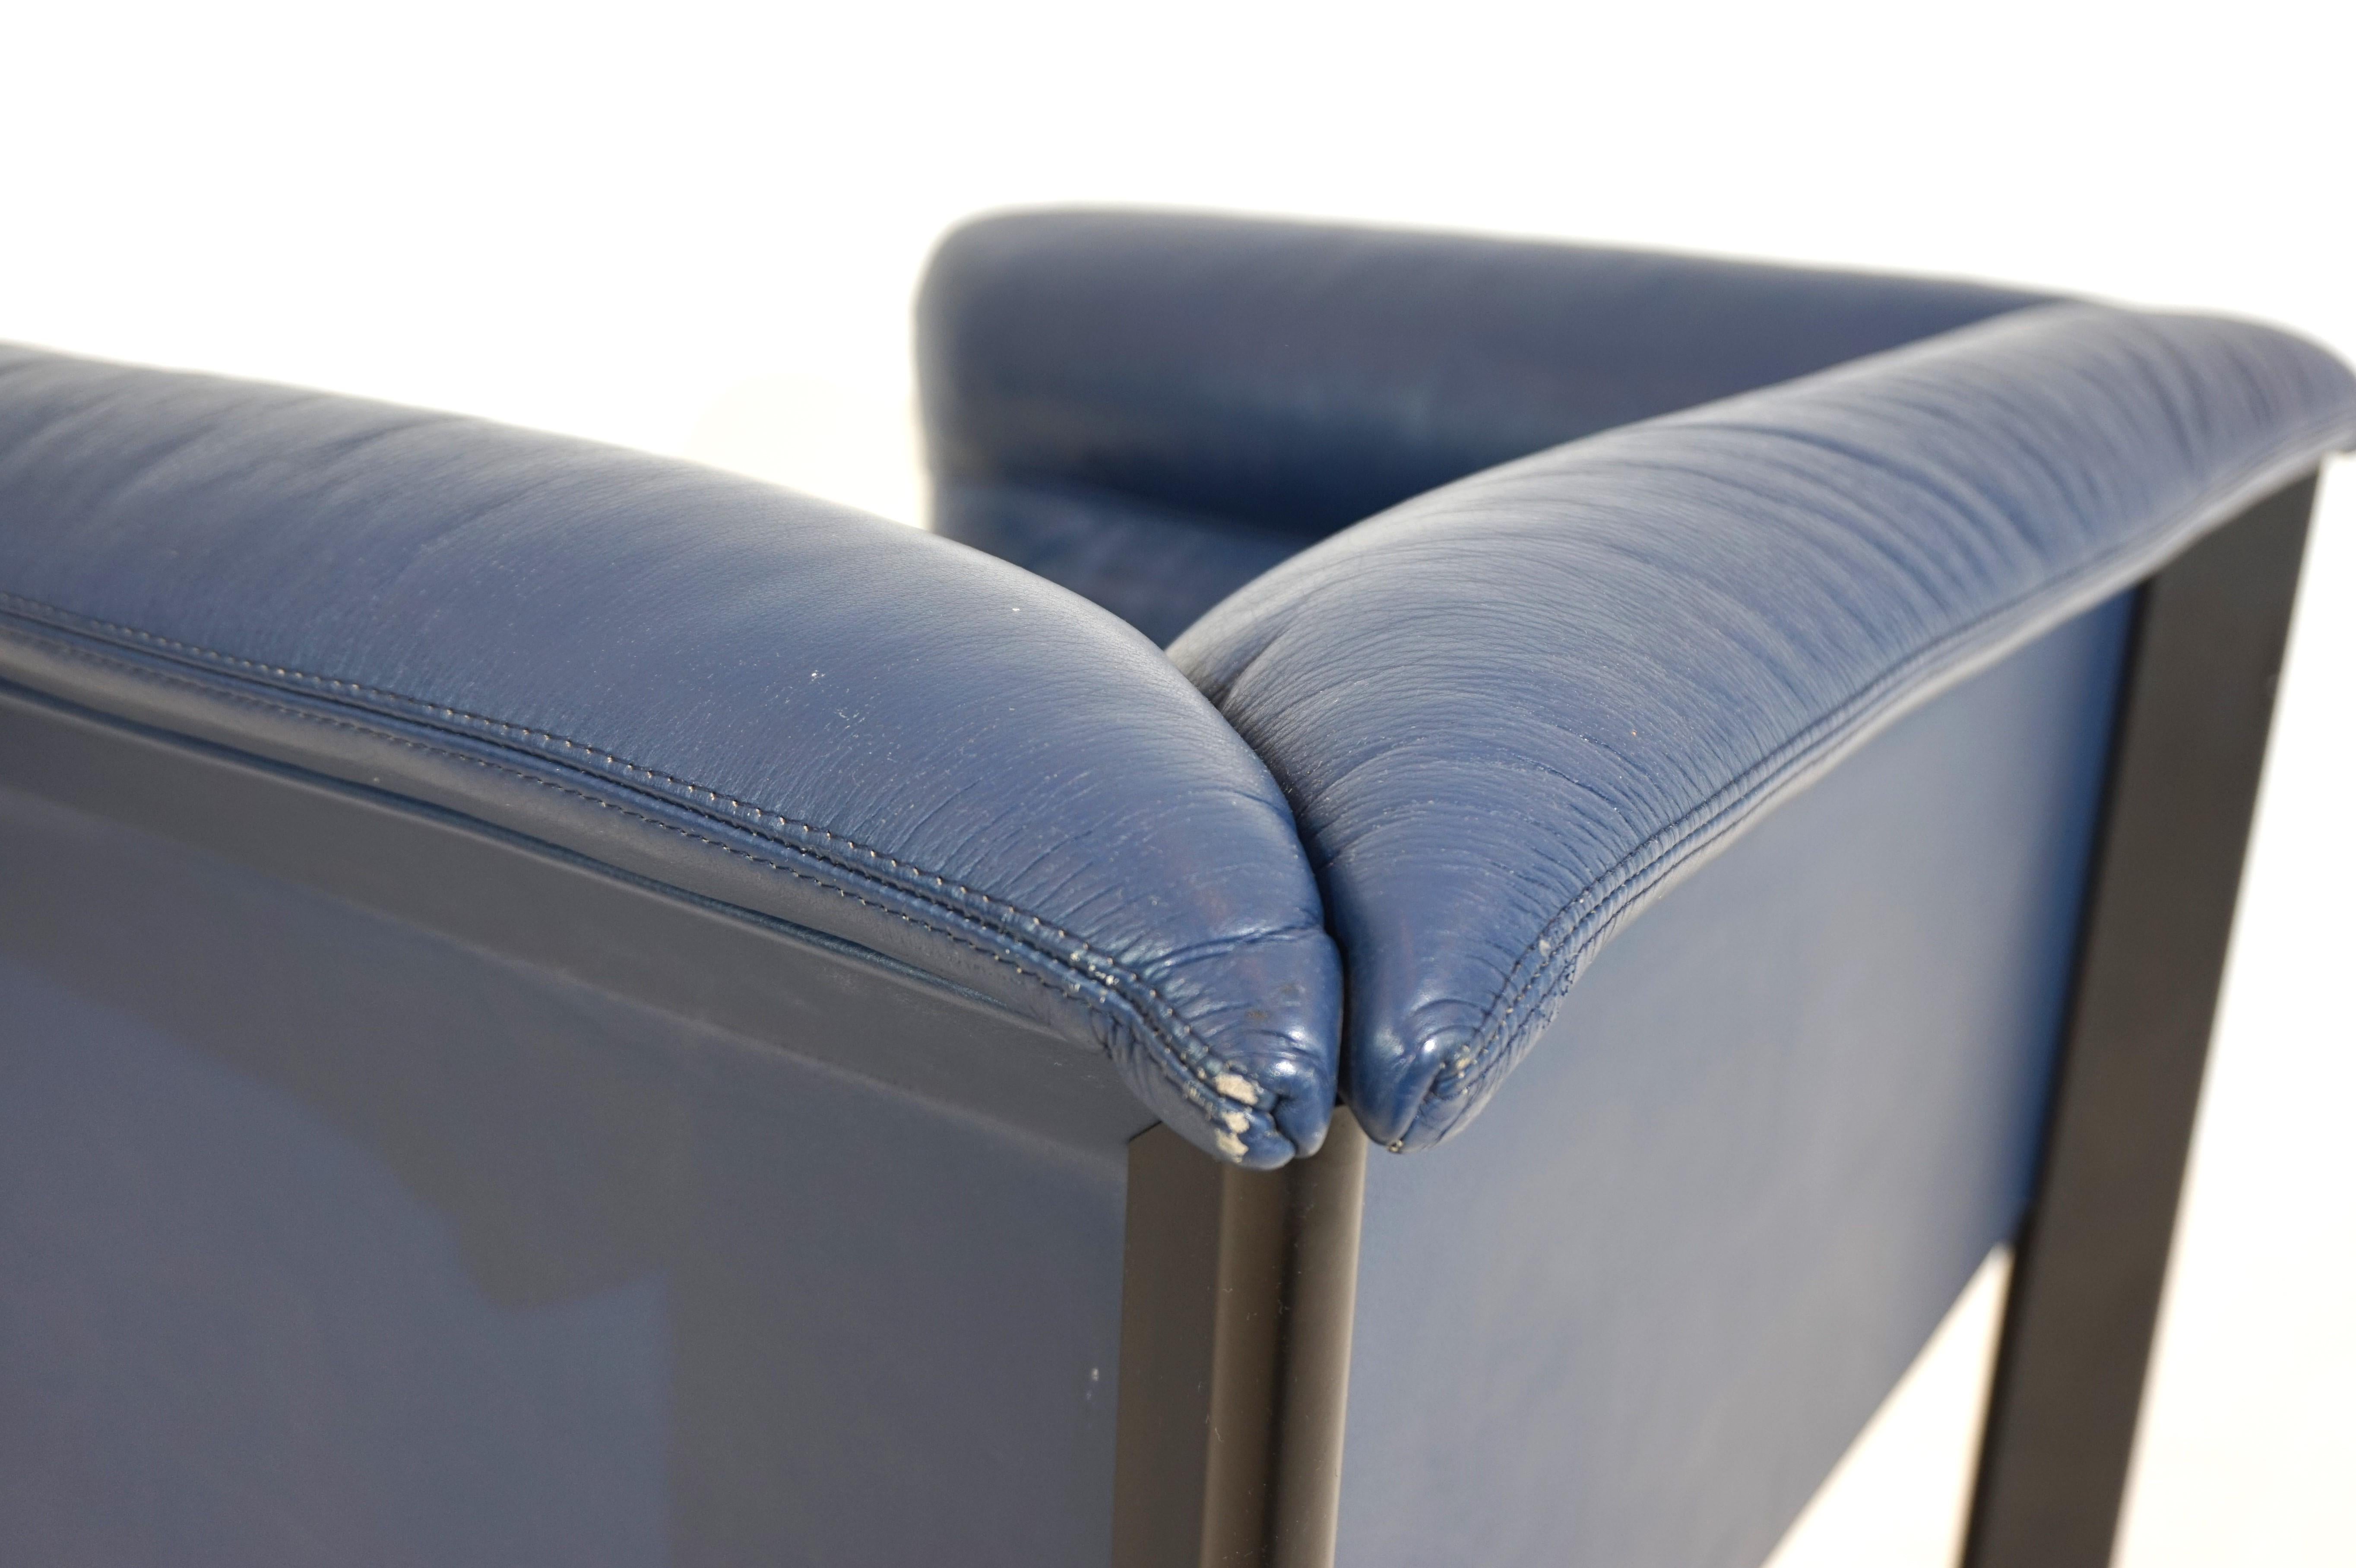 Poltrona Frau Interlude leather armchair by Marco Zanuso For Sale 5